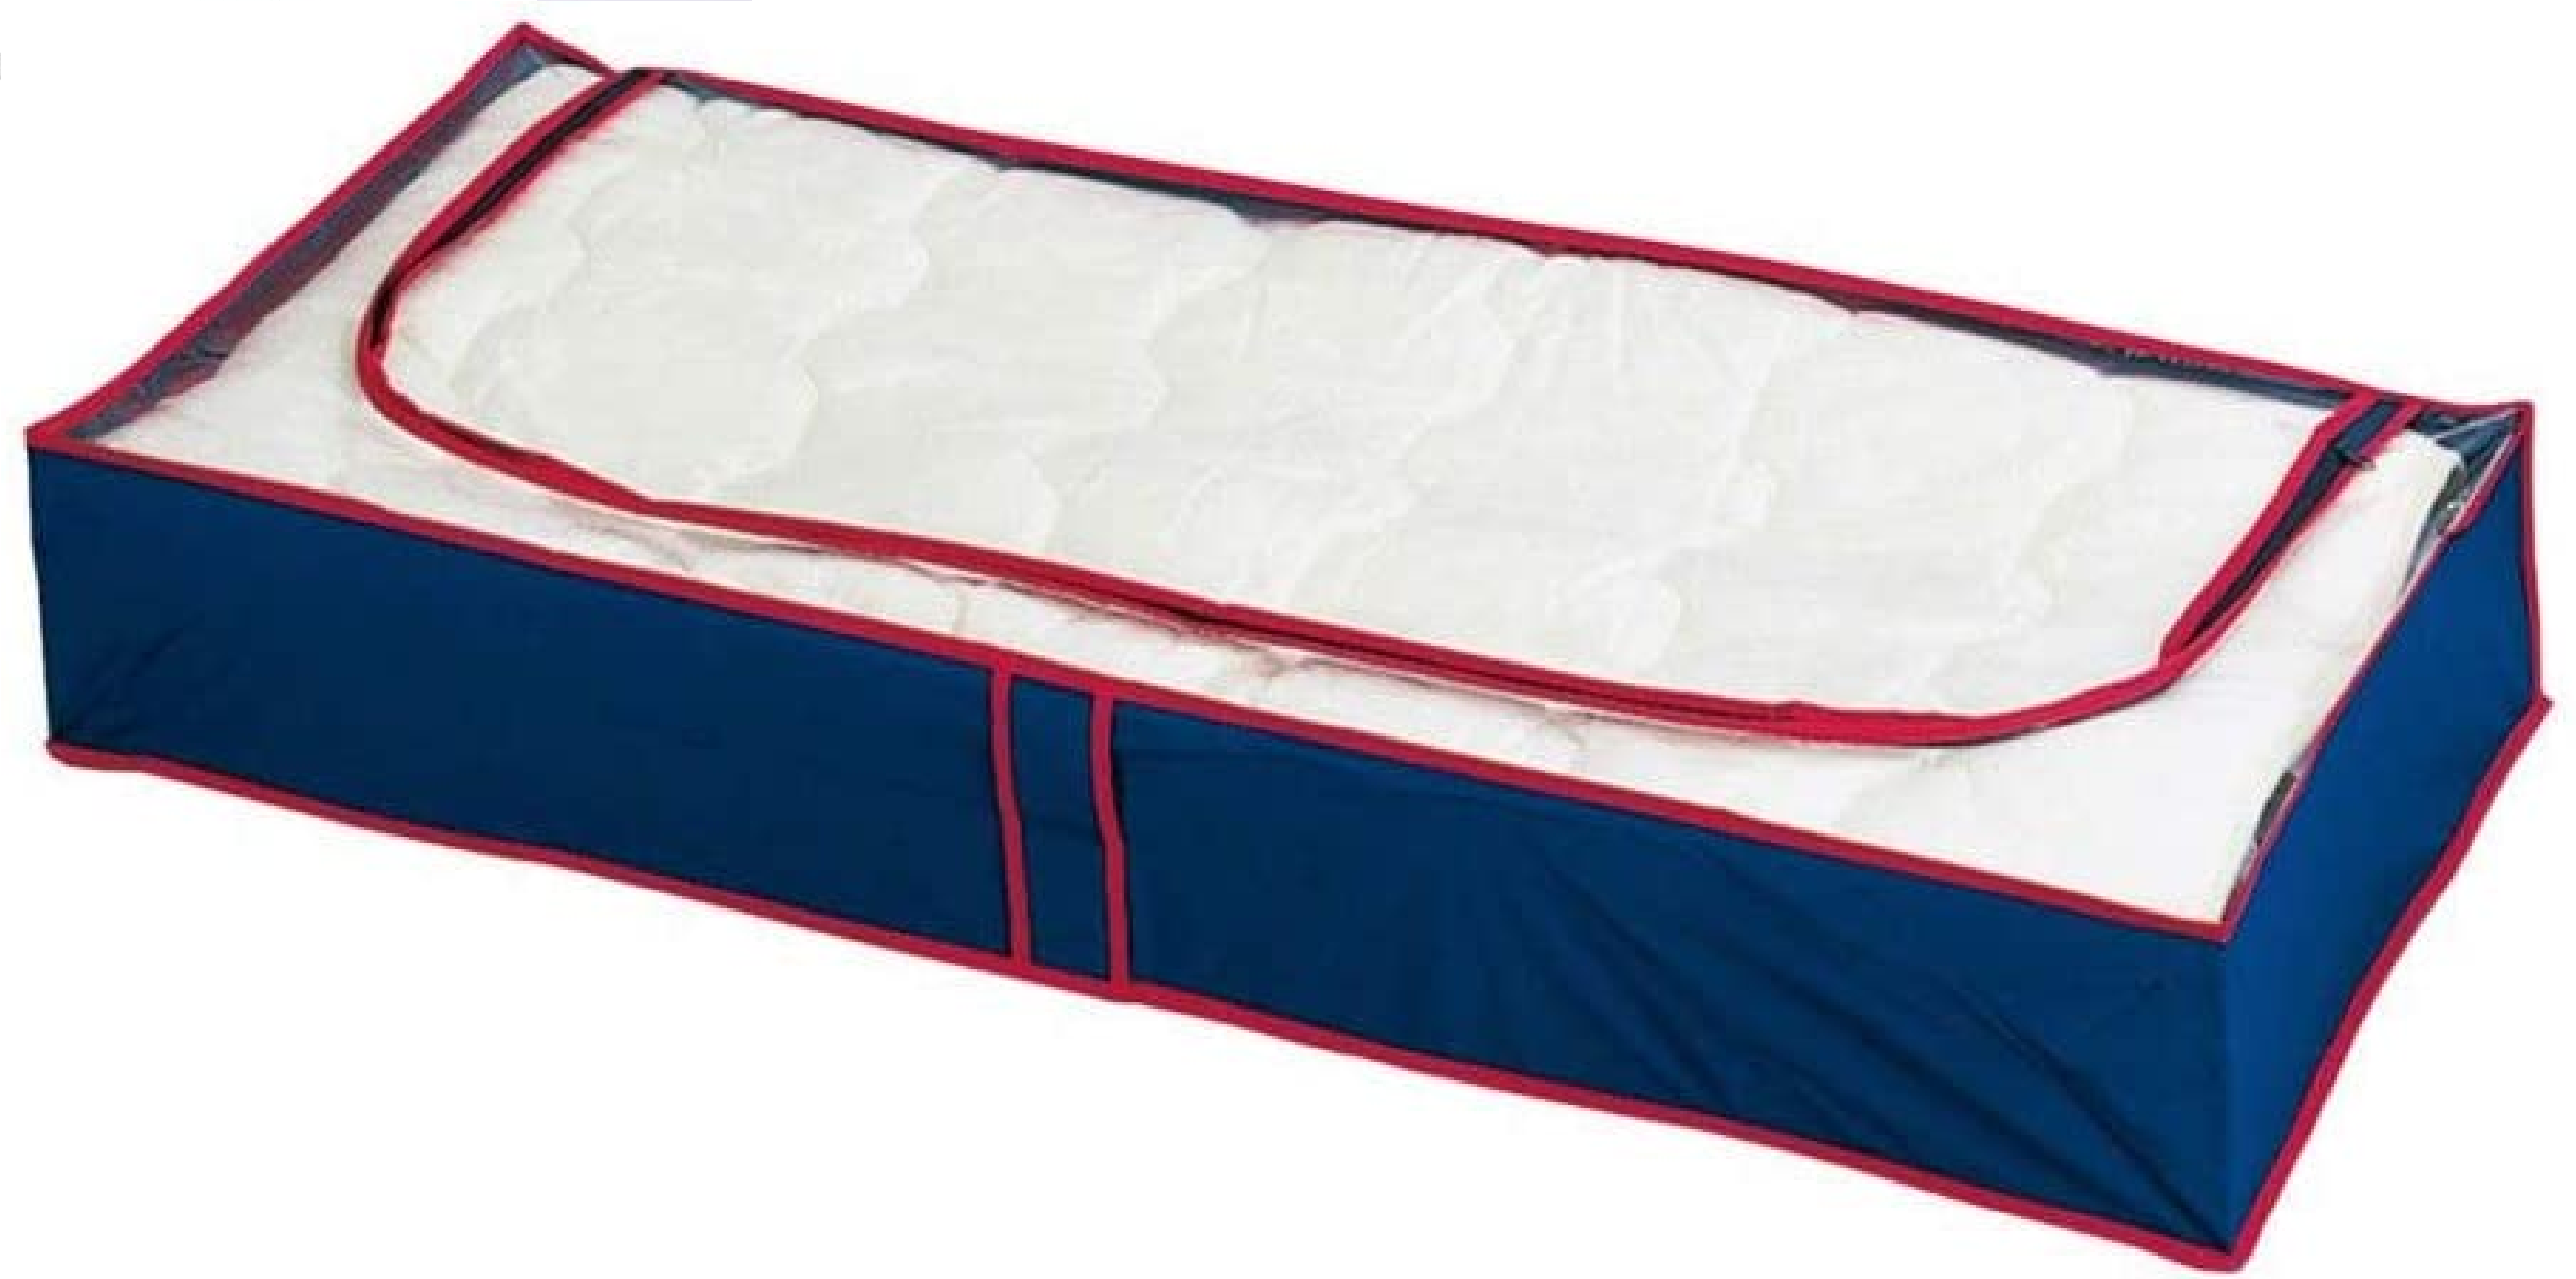 Unterbettkommode Blau-Rot - 4er Set, Polyethylen-Vinylacetat, 100 x 15 x 45 cm, Blau